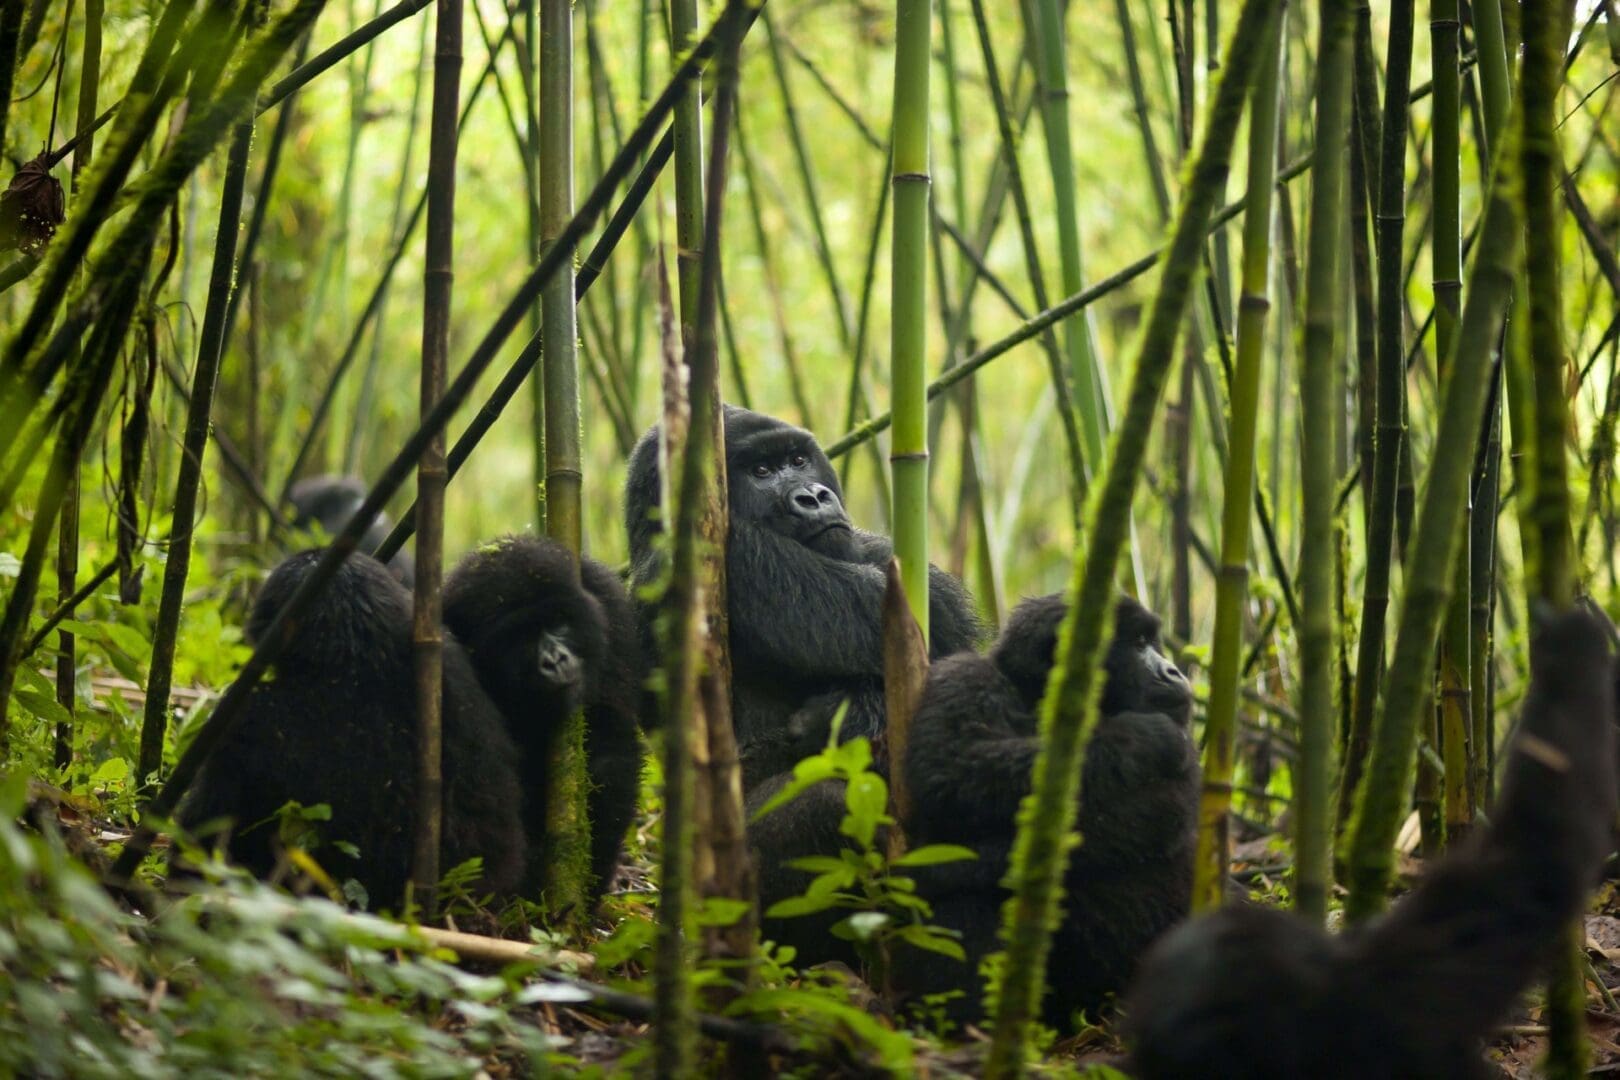 Gorillas in Bamboos